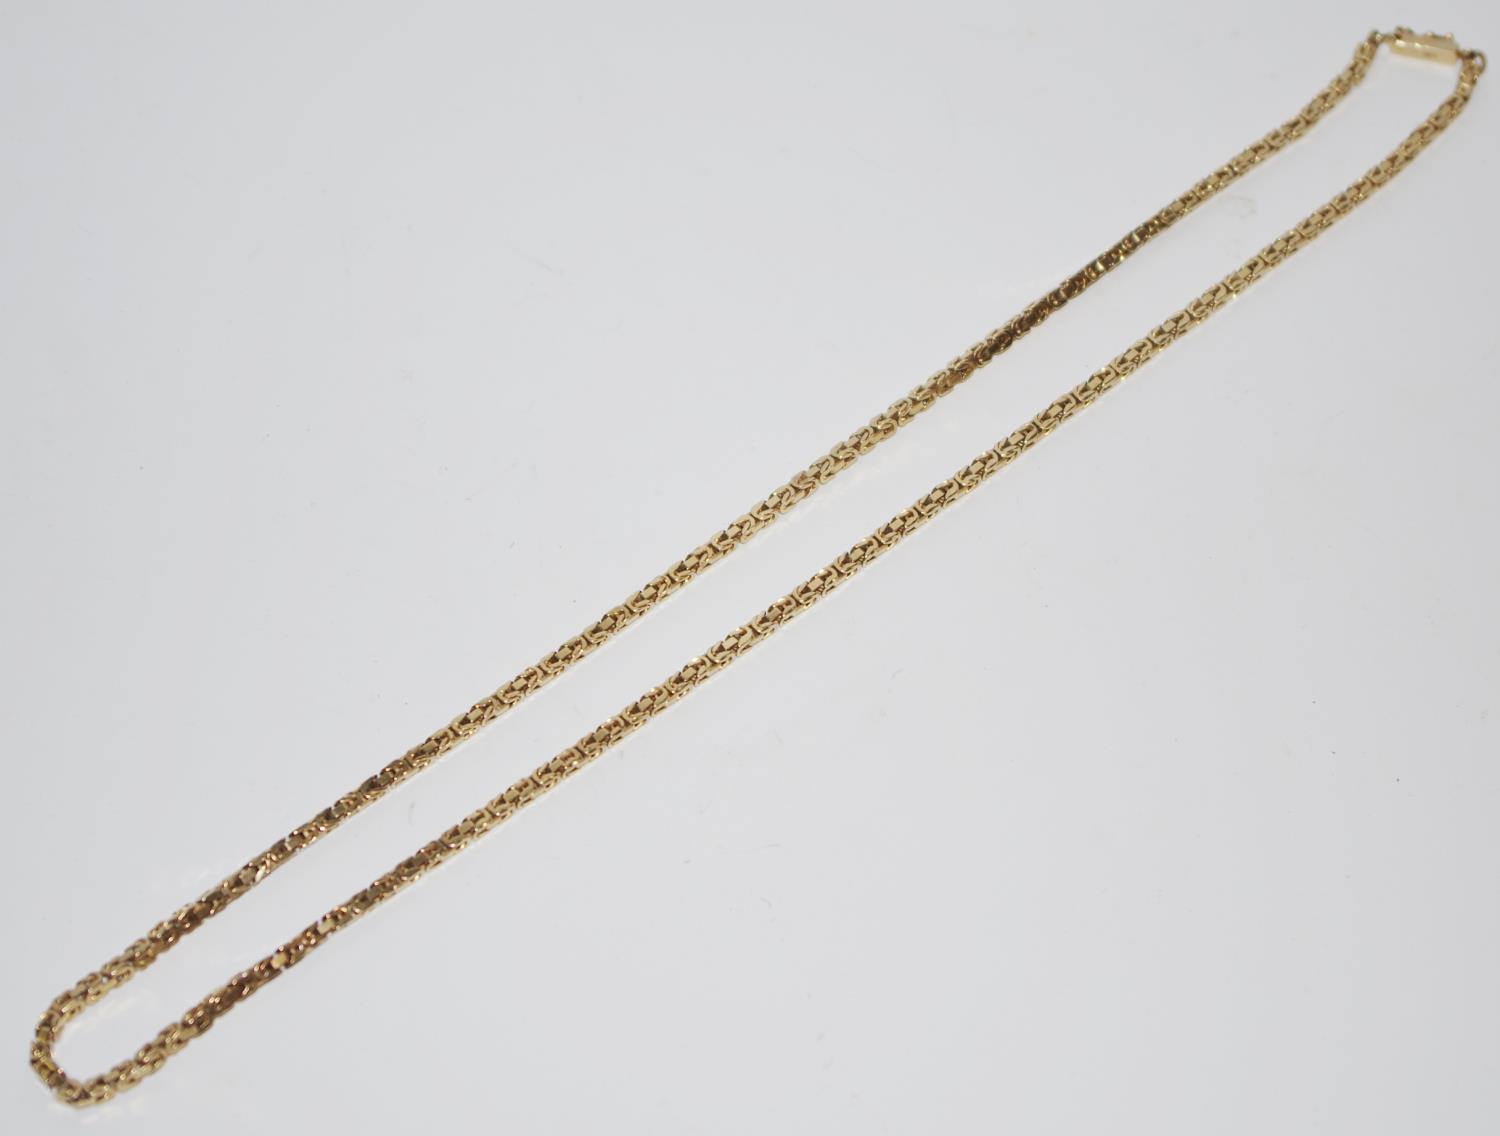 A 9ct gold fancy Byzantine link necklace, 58cm long, 32.2g